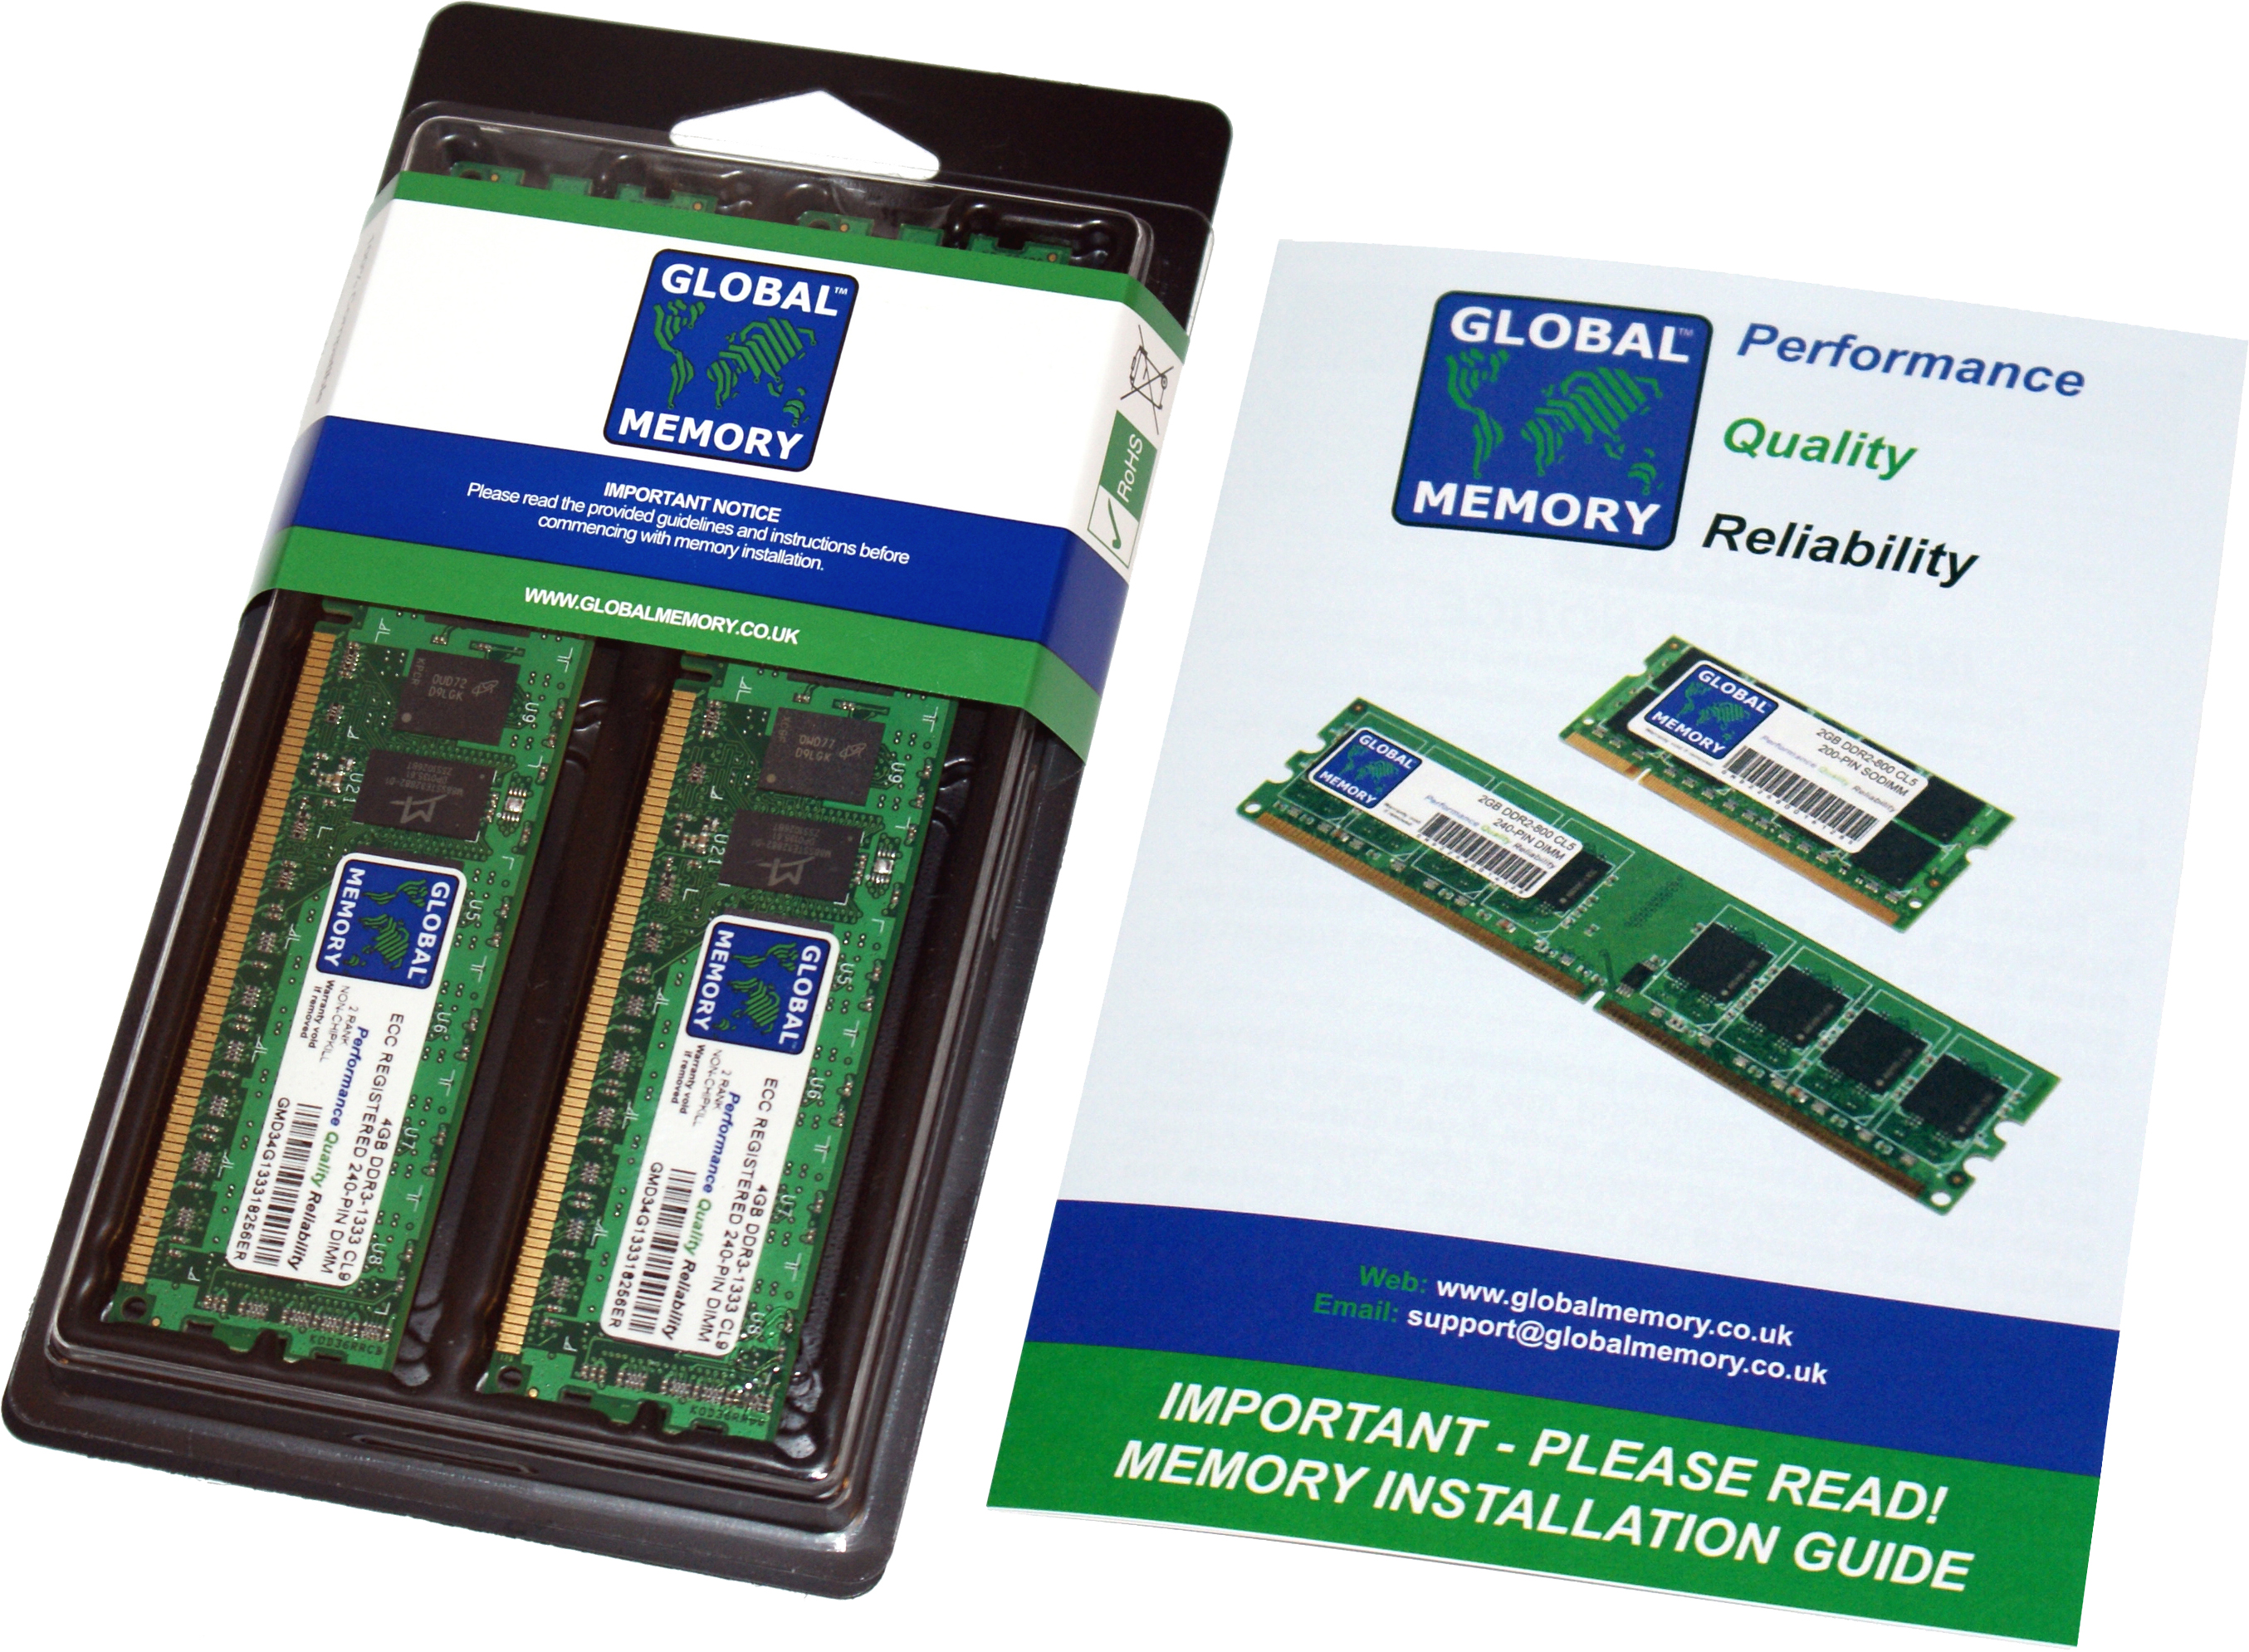 16GB (2 x 8GB) DDR4 2400MHz PC4-19200 288-PIN ECC REGISTERED DIMM (RDIMM) MEMORY RAM KIT FOR DELL SERVERS/WORKSTATIONS (2 RANK KIT CHIPKILL)